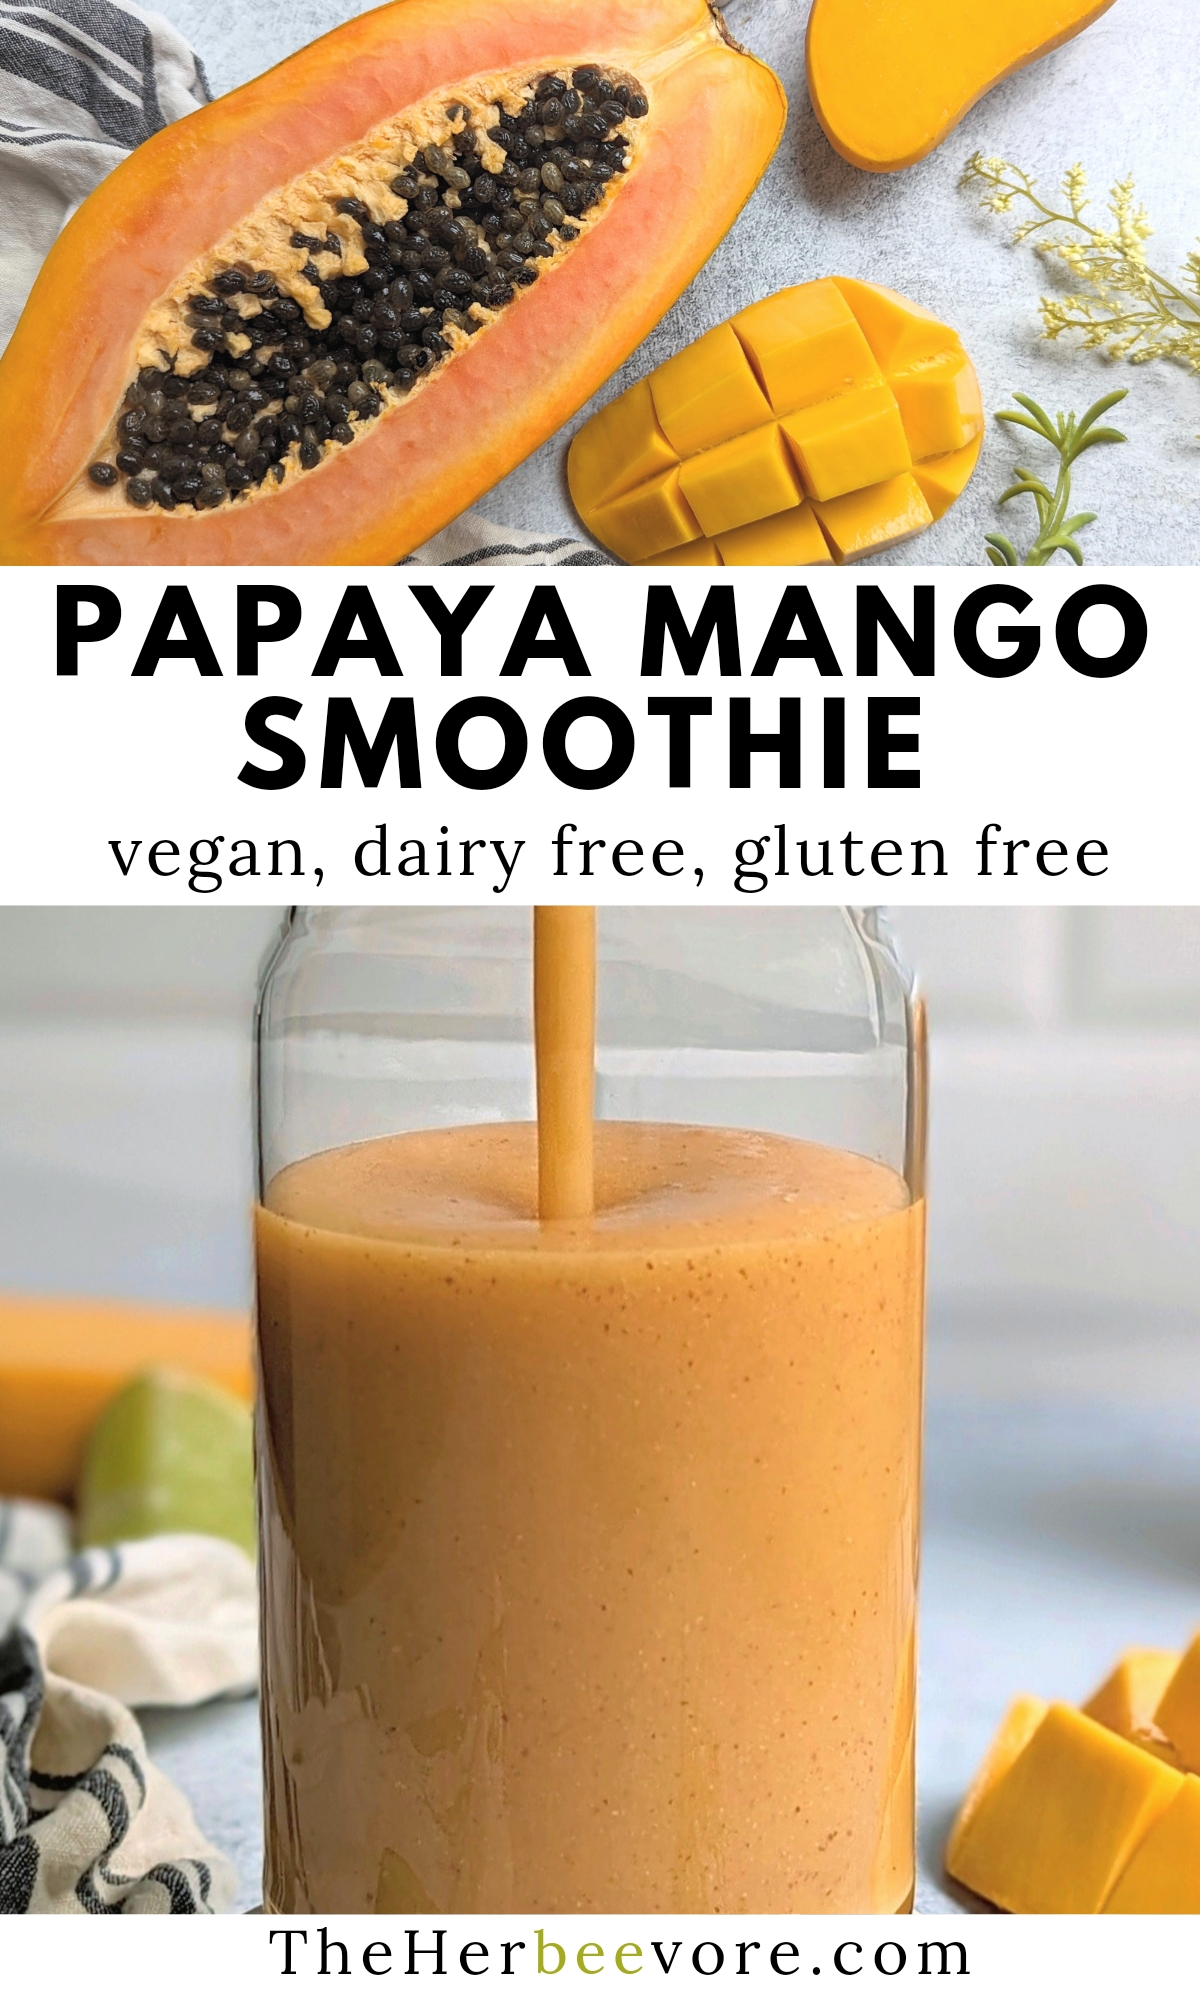 papaya mango smoothie recipe vegan, dairy free, gluten free, no protein powder